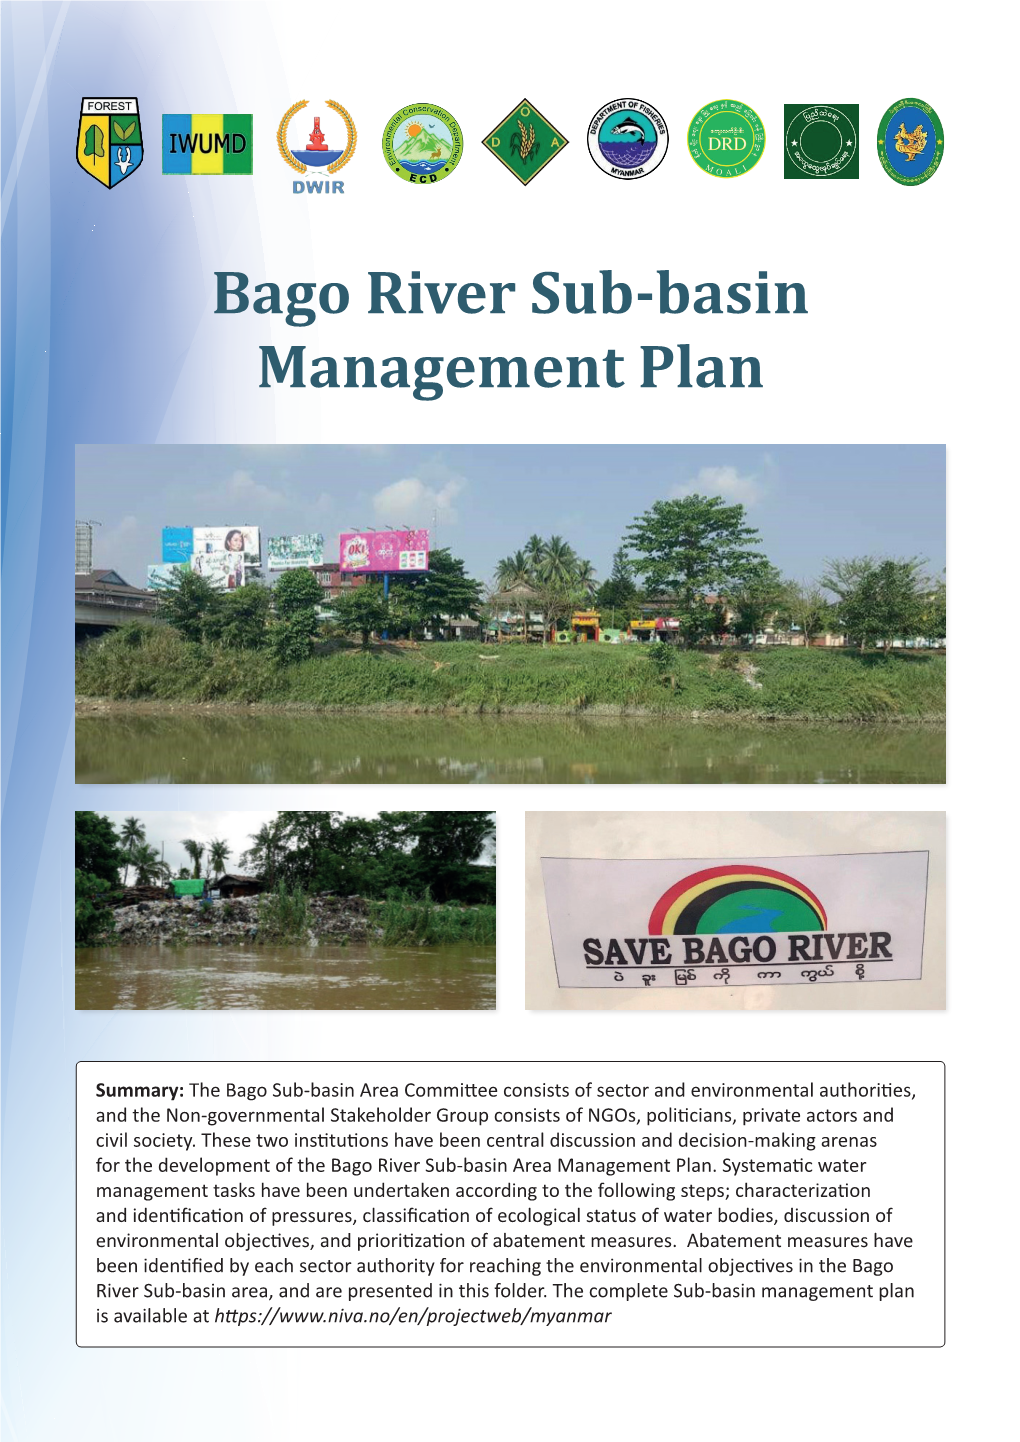 Bago River Sub-Basin Management Plan